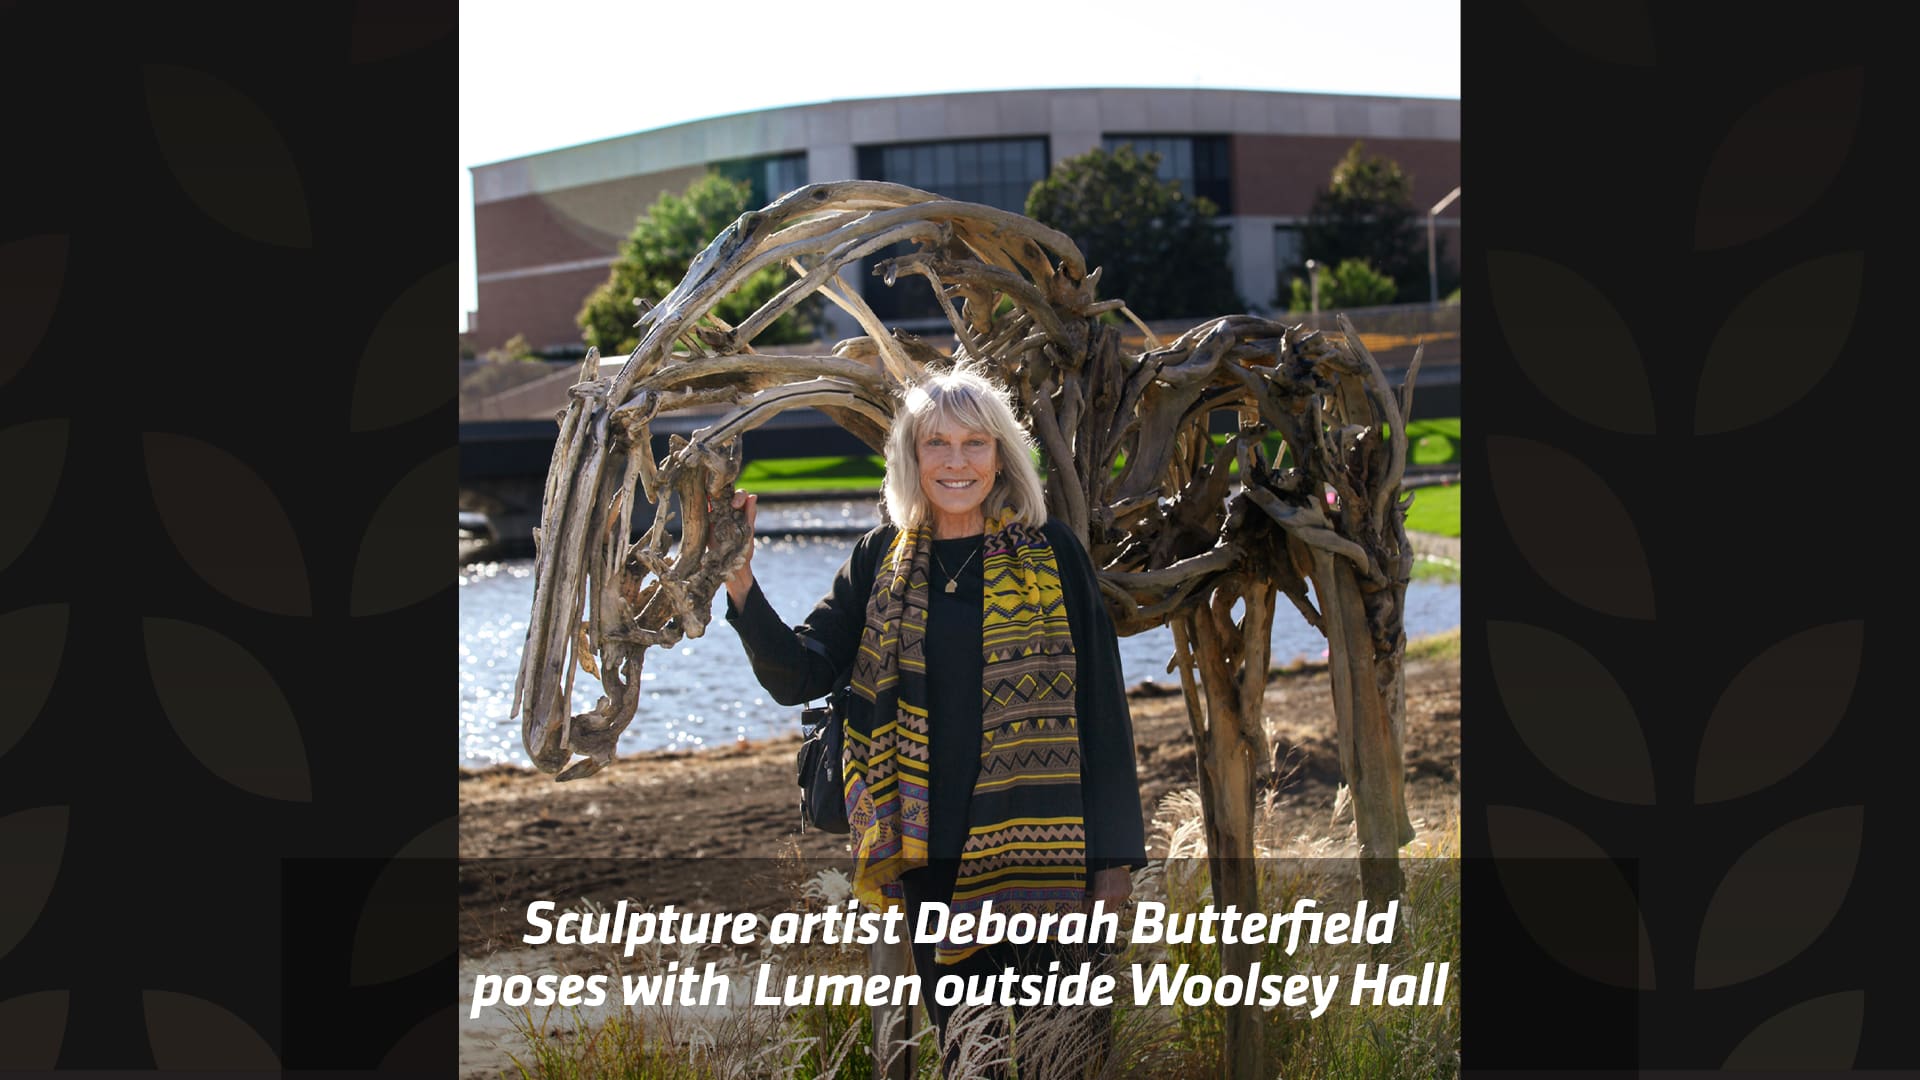 Sculpture artist Deborah Butterfield poses with Lumen outside Woolsey Hall